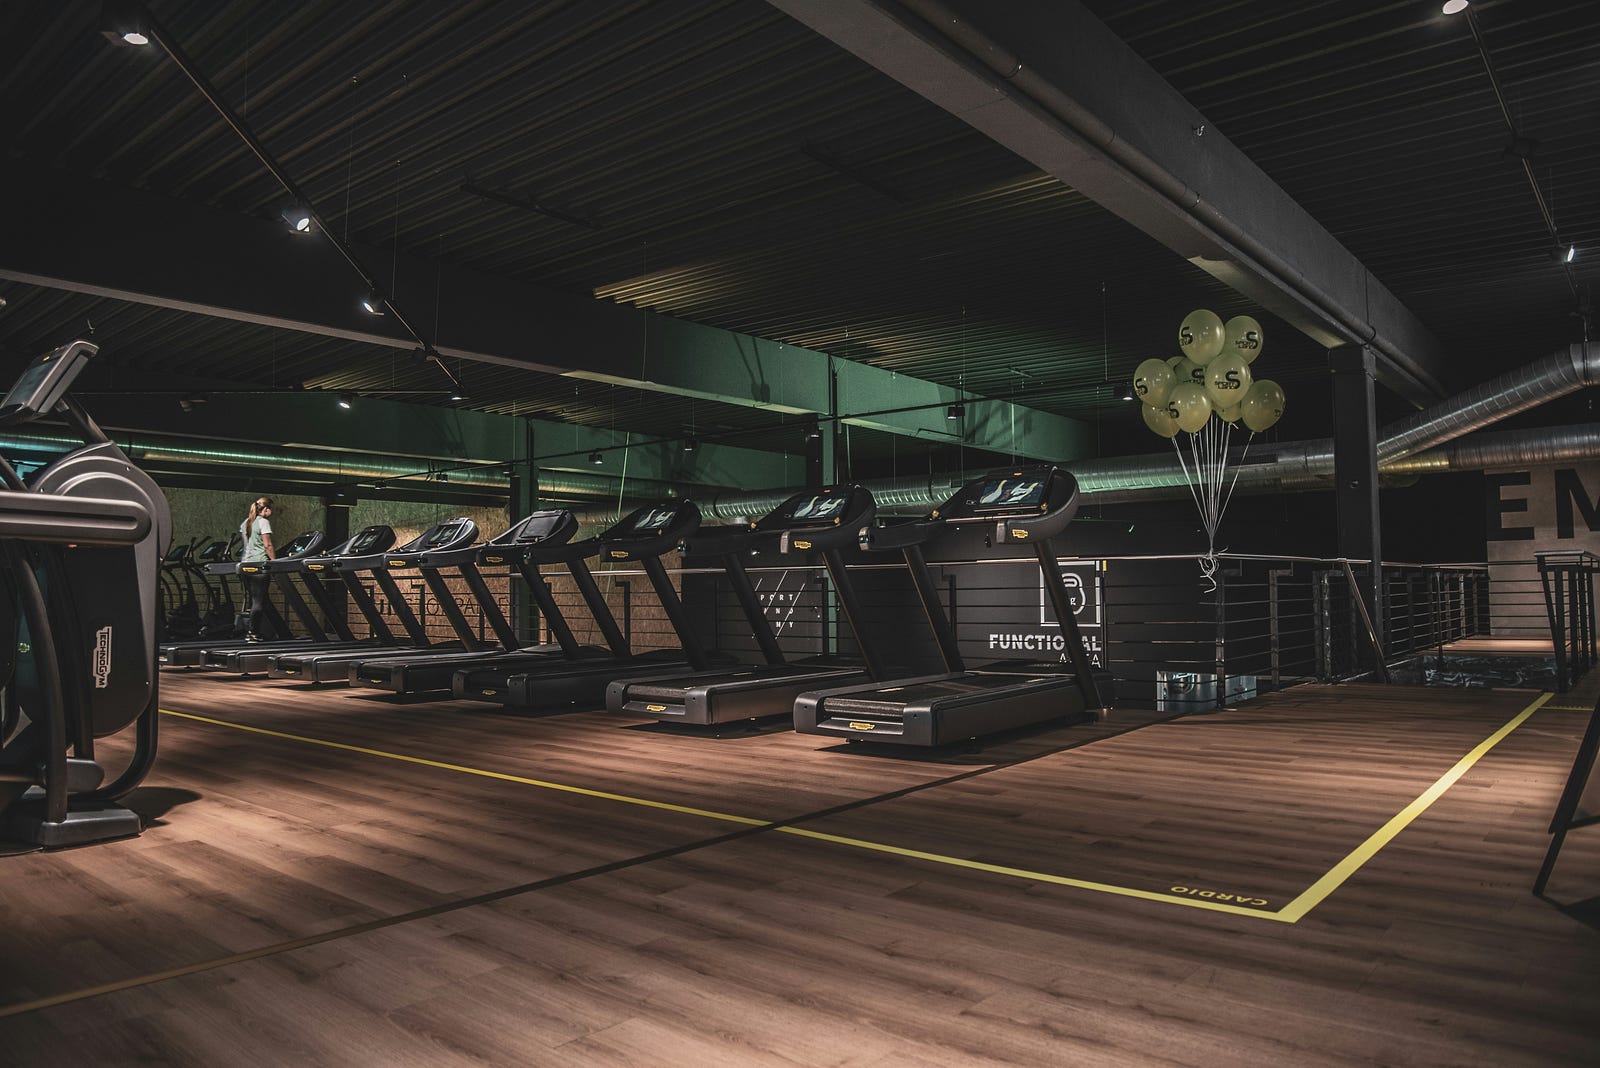 Treadmills in a relatively dark gym.